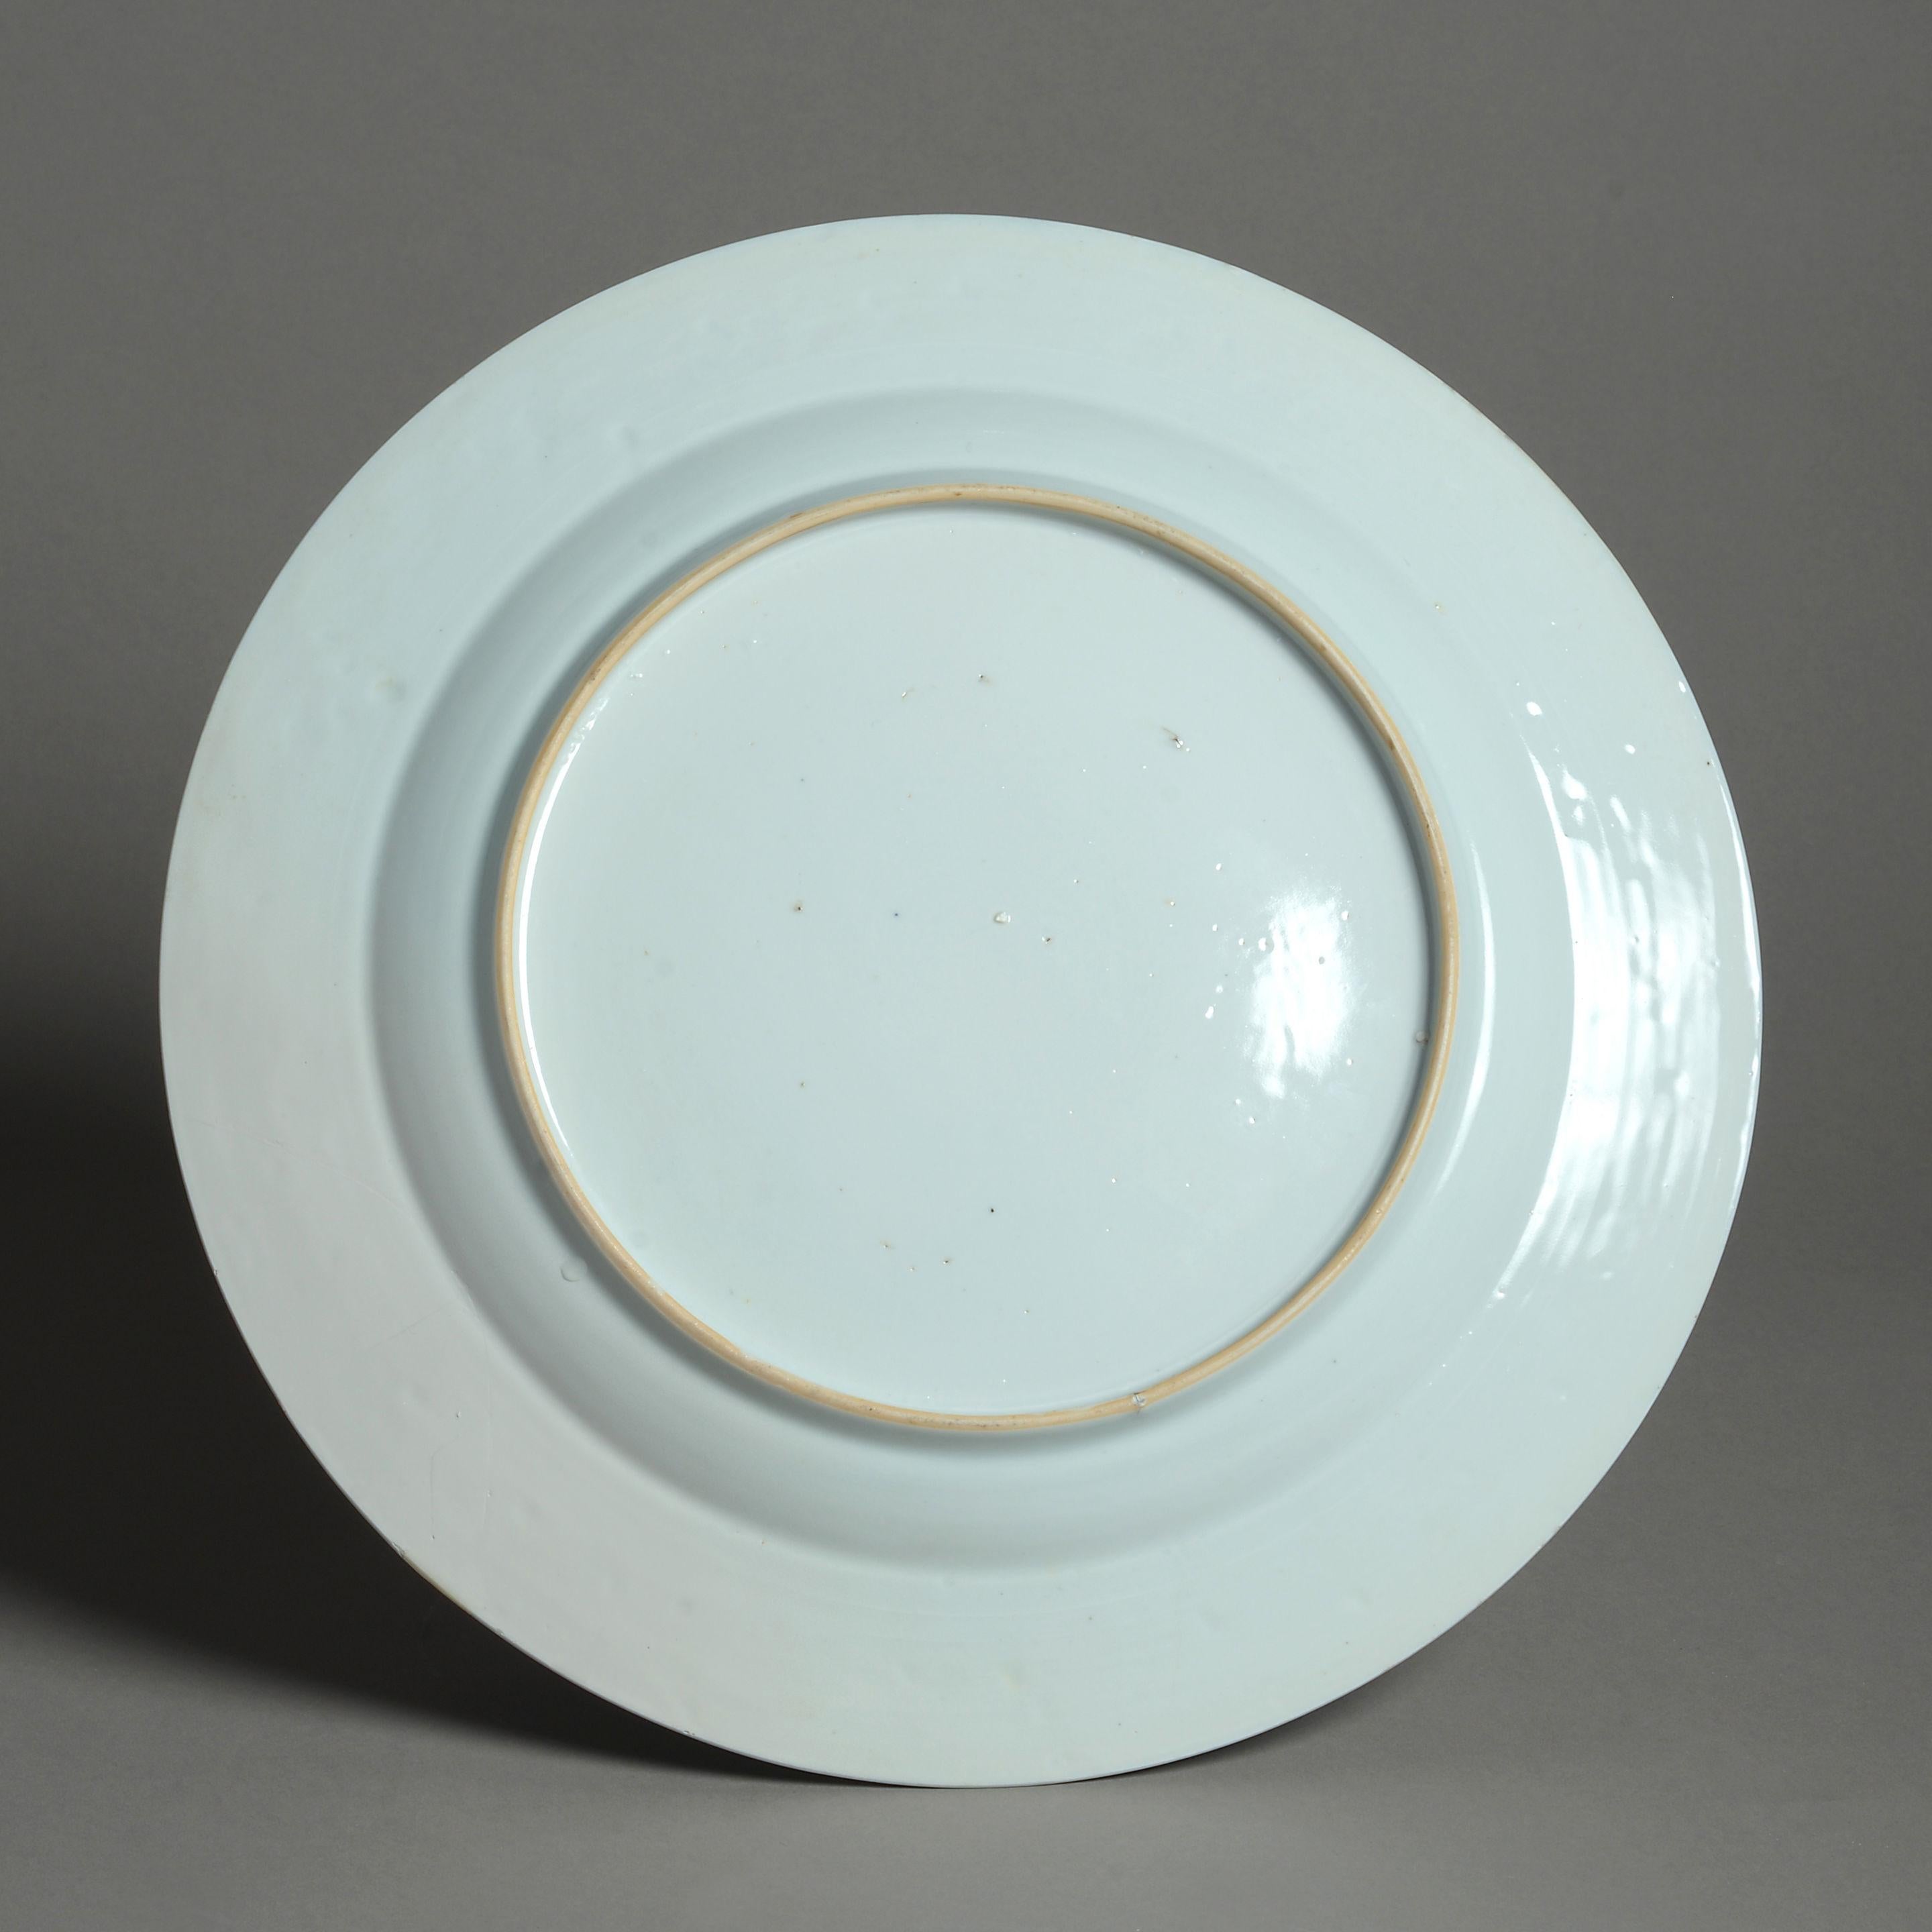 qianlong blue and white porcelain